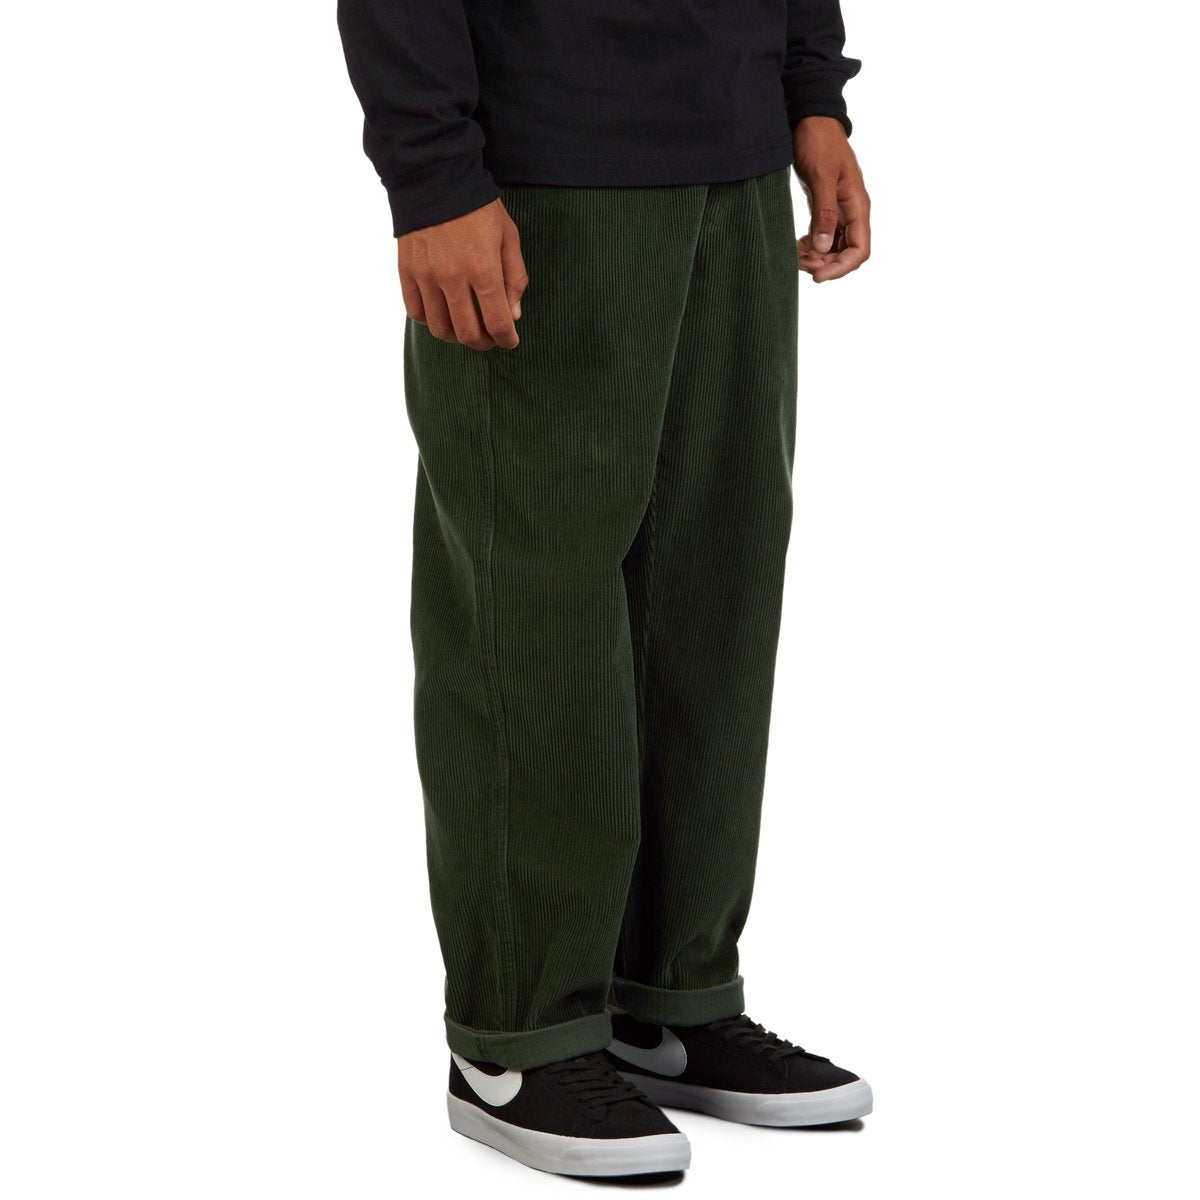 CCS Original Relaxed Corduroy Pants - Green image 4